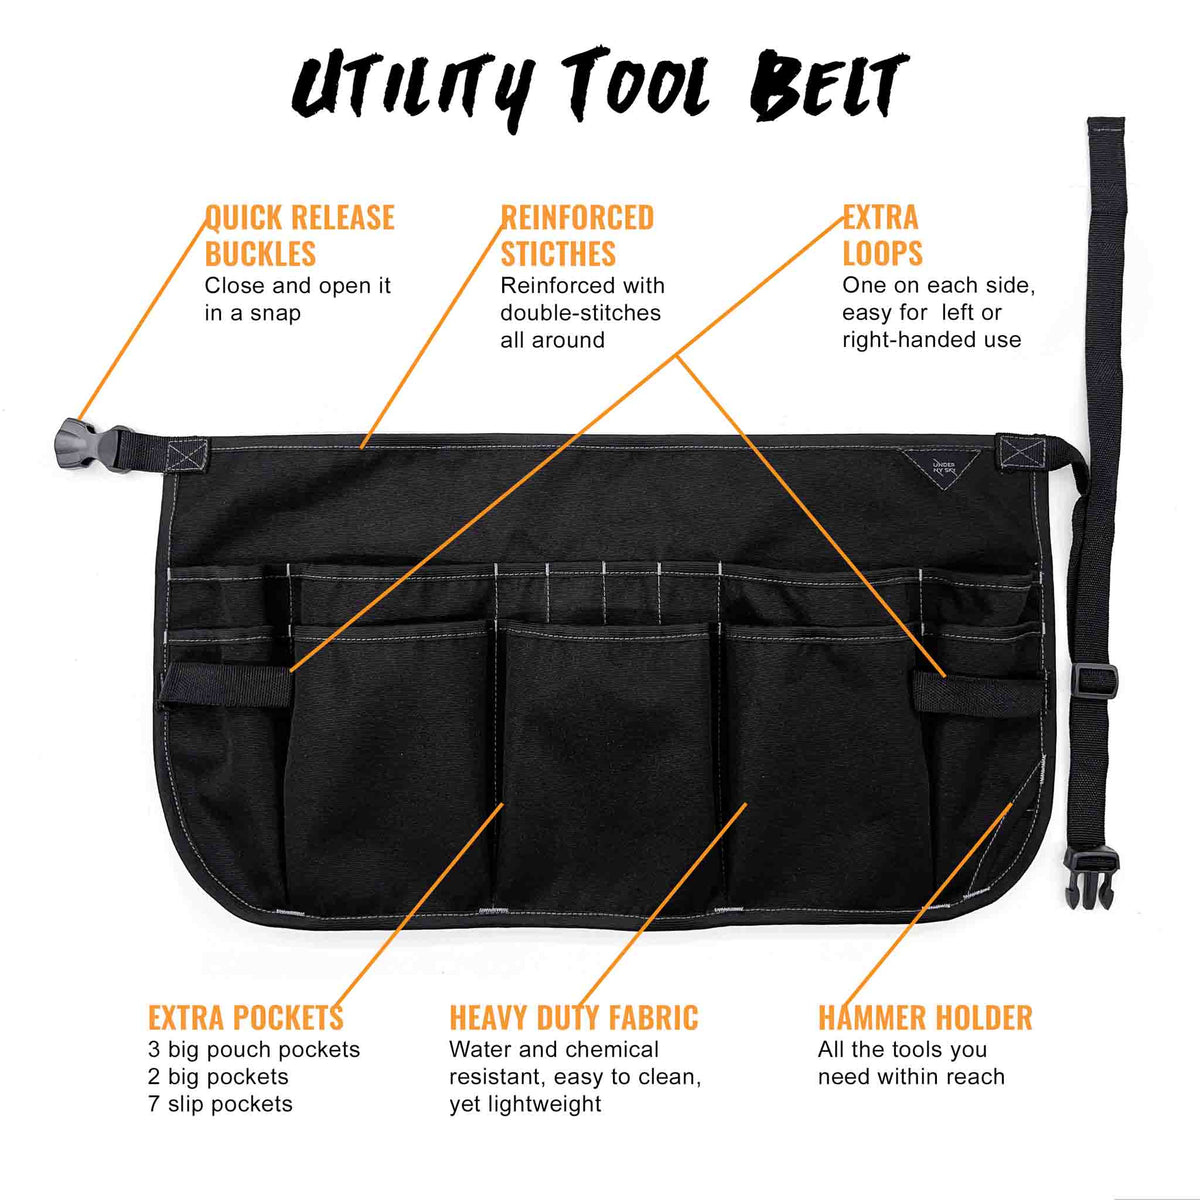 Tool Belt - 12 Pockets, 2 Loops, 1 Hammer Loop - Heavy Duty - Adjustable Pouch Apron - Mechanic, Shop, Electrician, Gardener, Makers - Under NY Sky